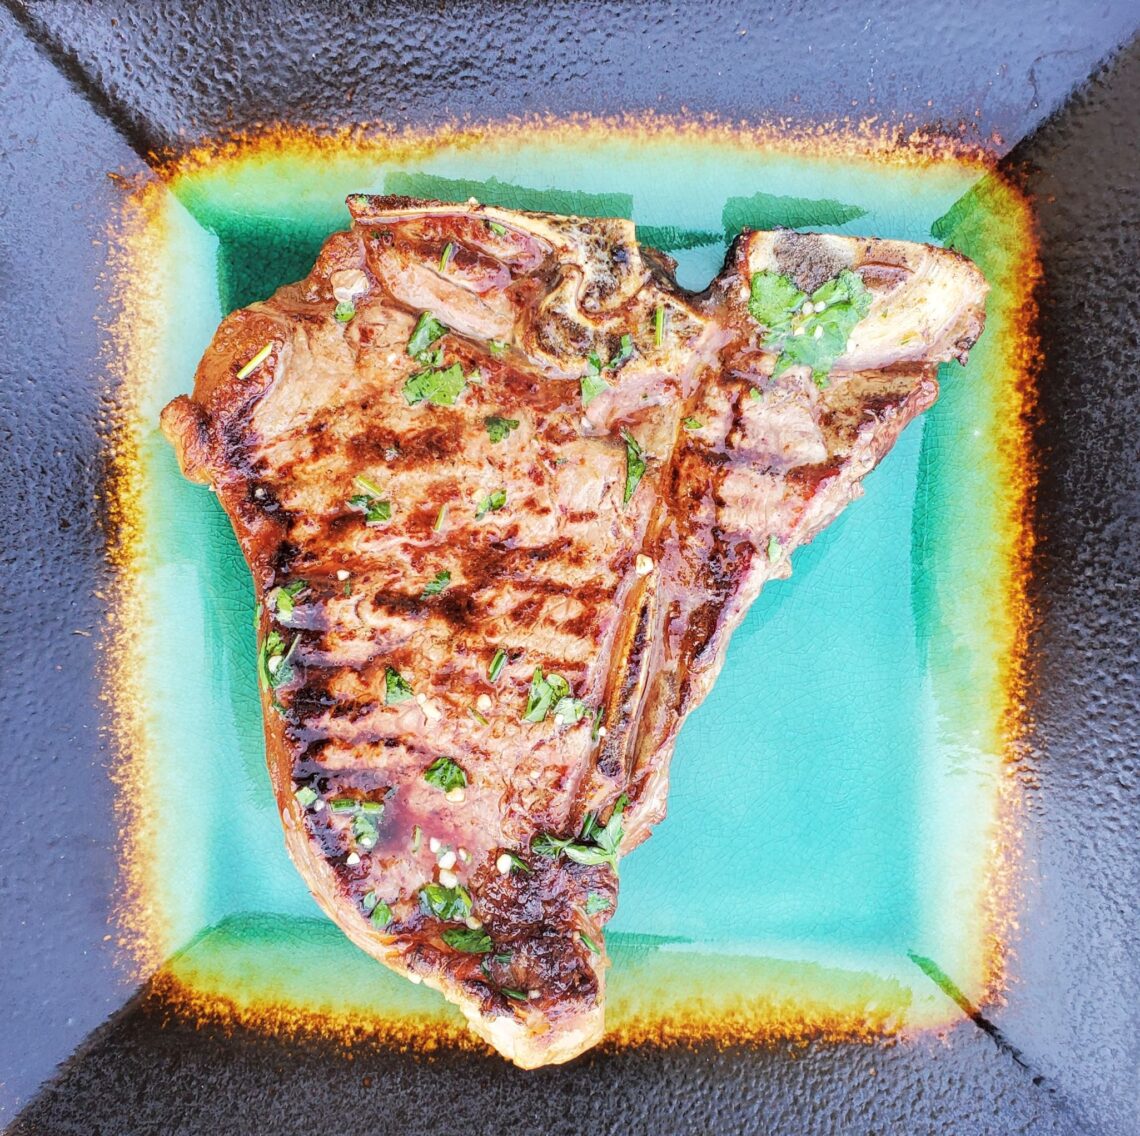 T-bone steak on a turquoise plate